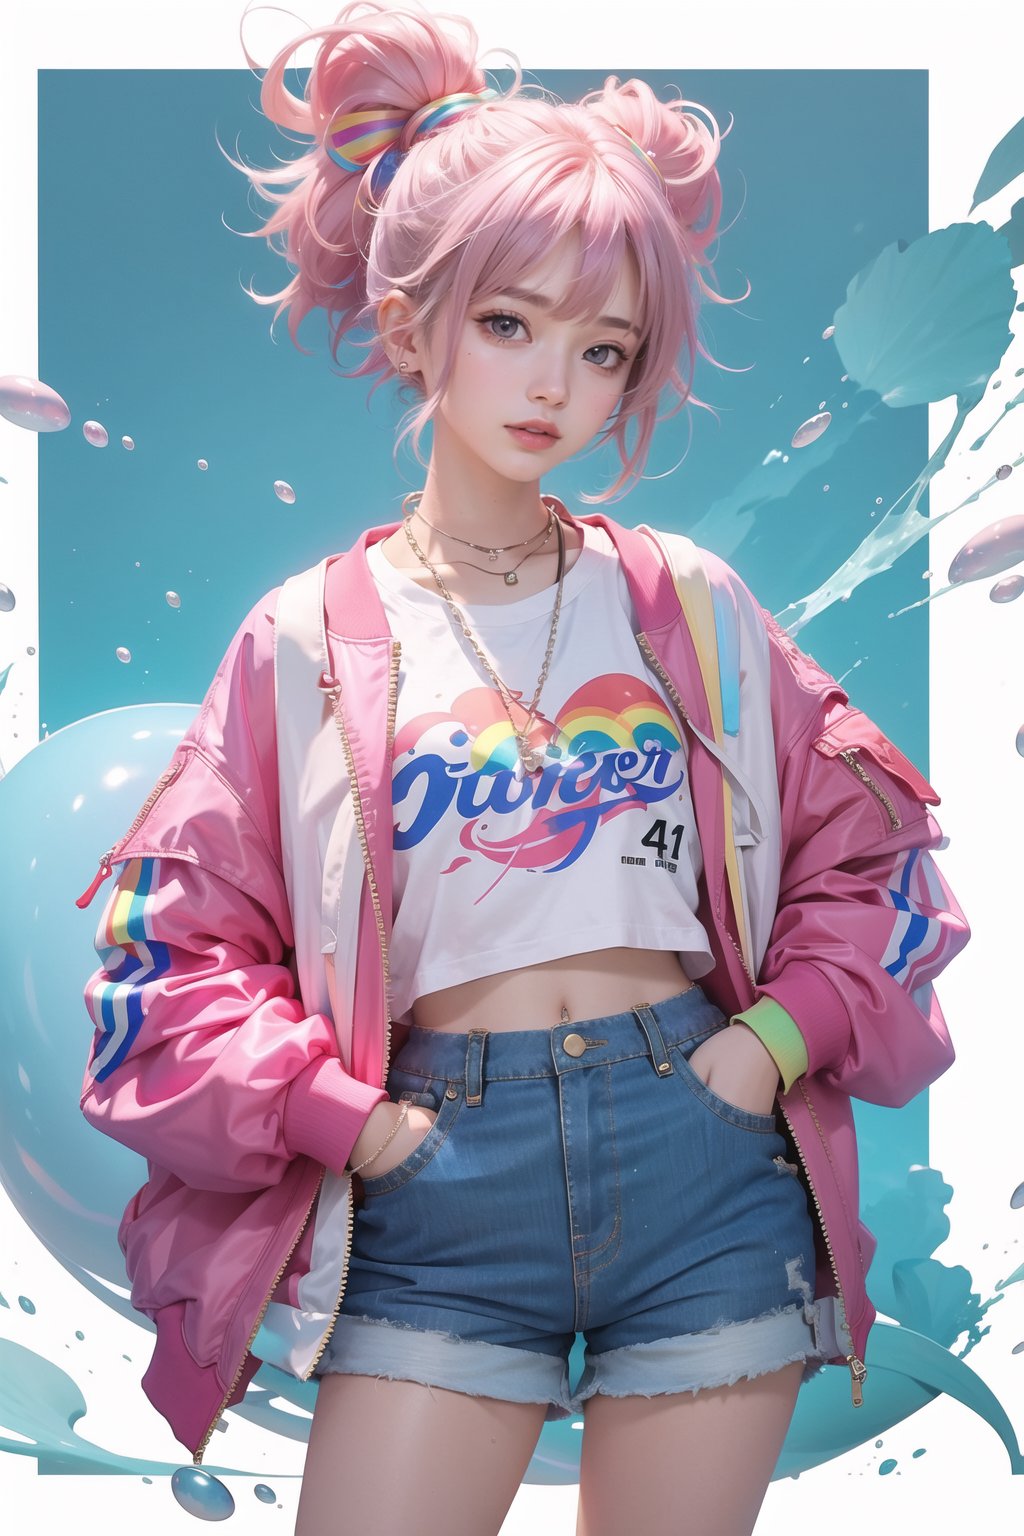 korea girl 22 year old, pink sleek pixie shorts hair style, wearing oversize rainbow jacket bomber m1, shorts bluejeans, white sneaker, splash color on background